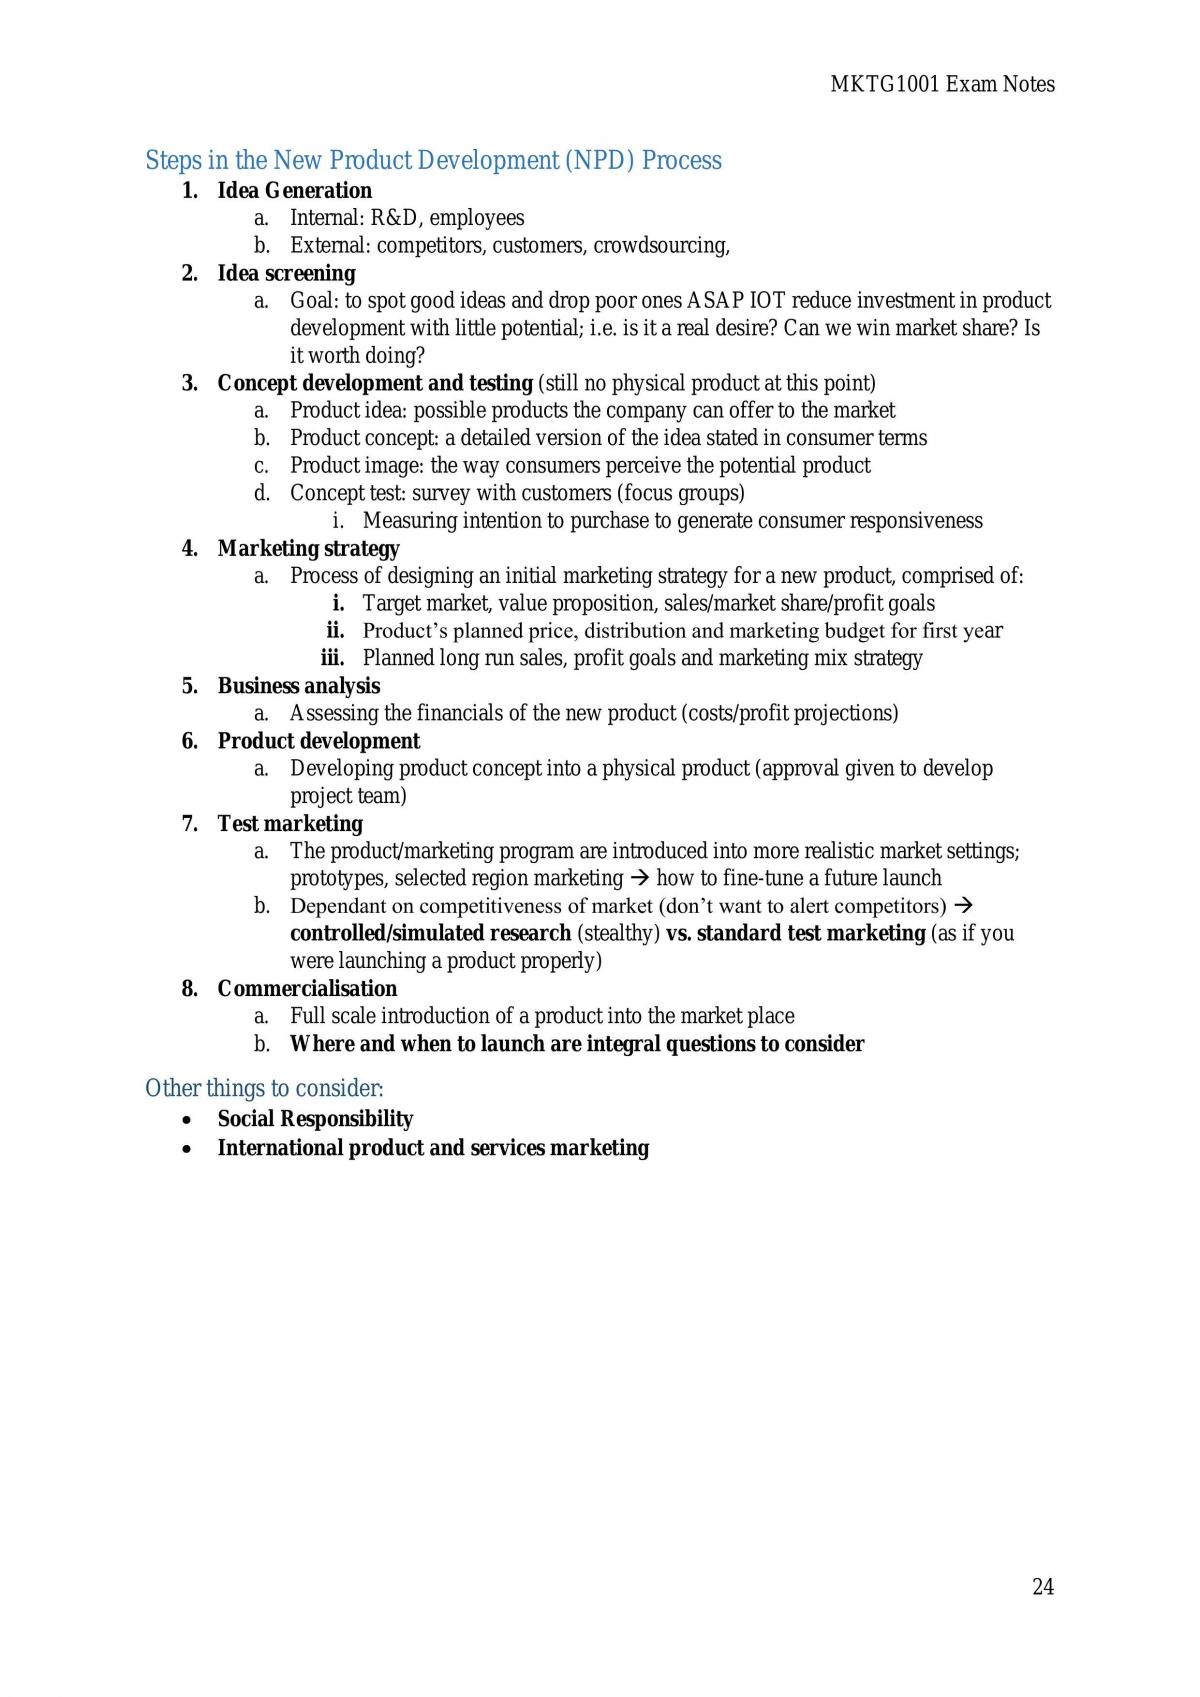 MKTG1001 Final Semester Notes - Page 24